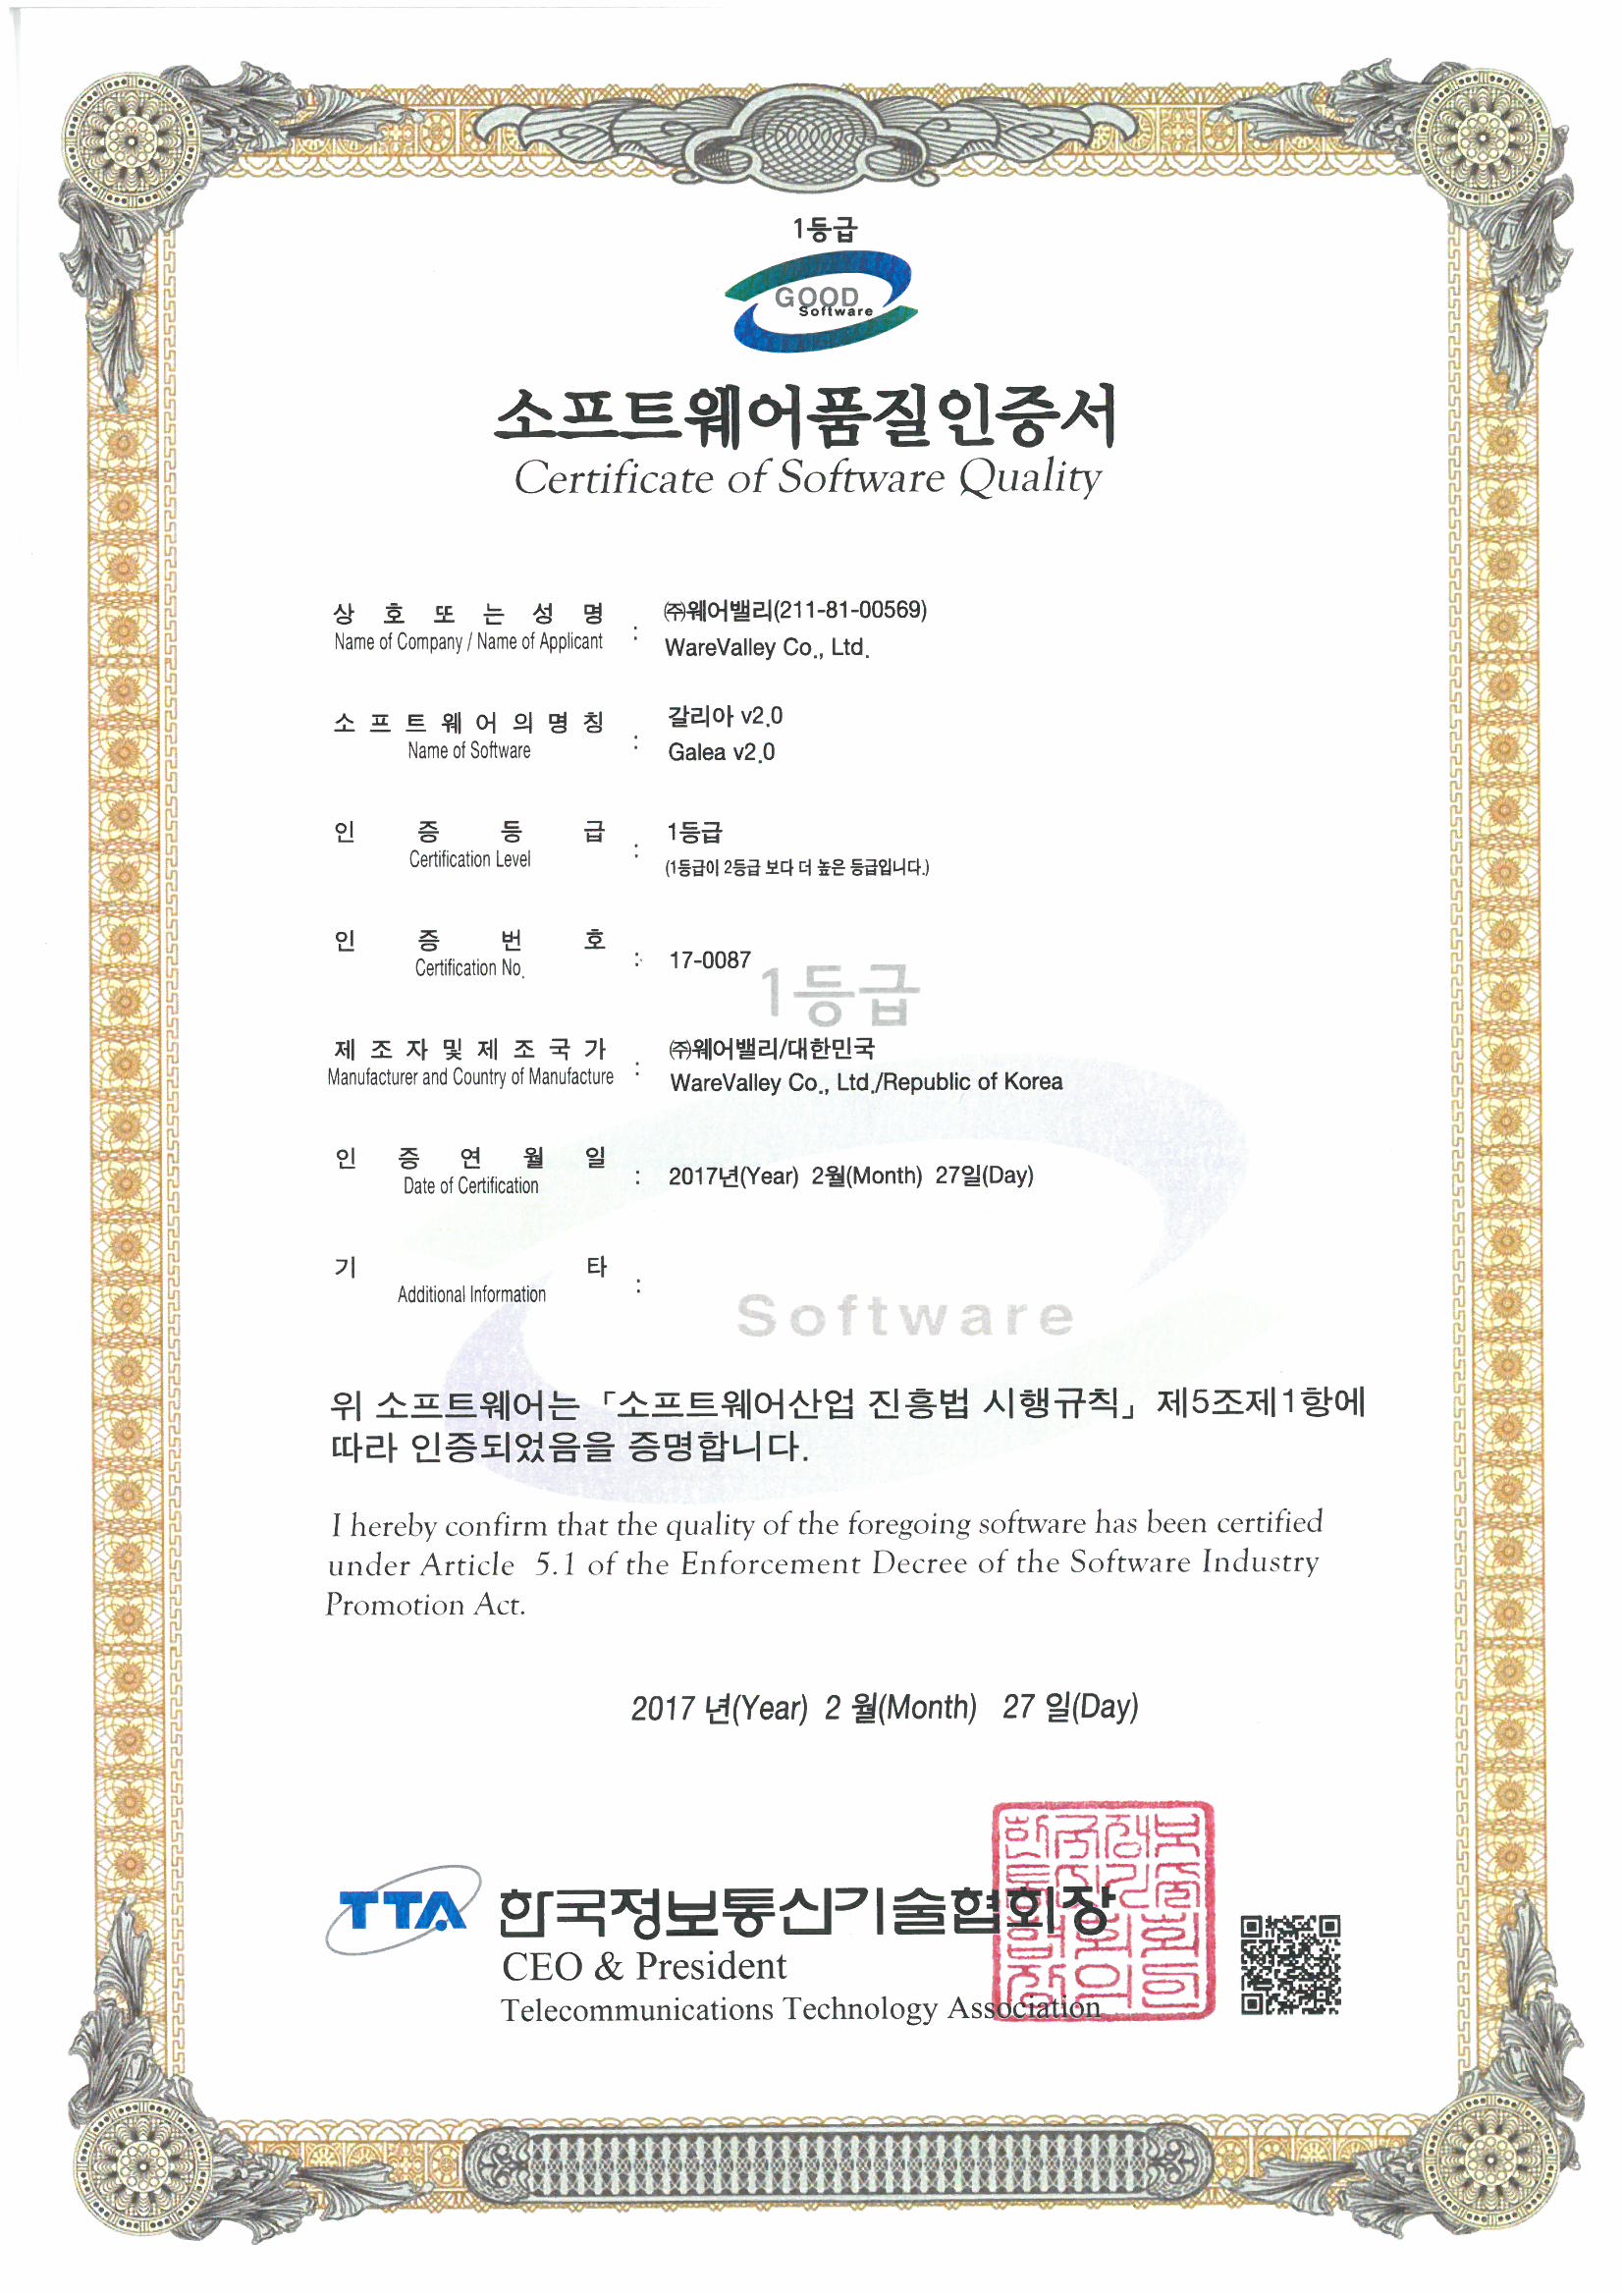 GS certification 17-0087